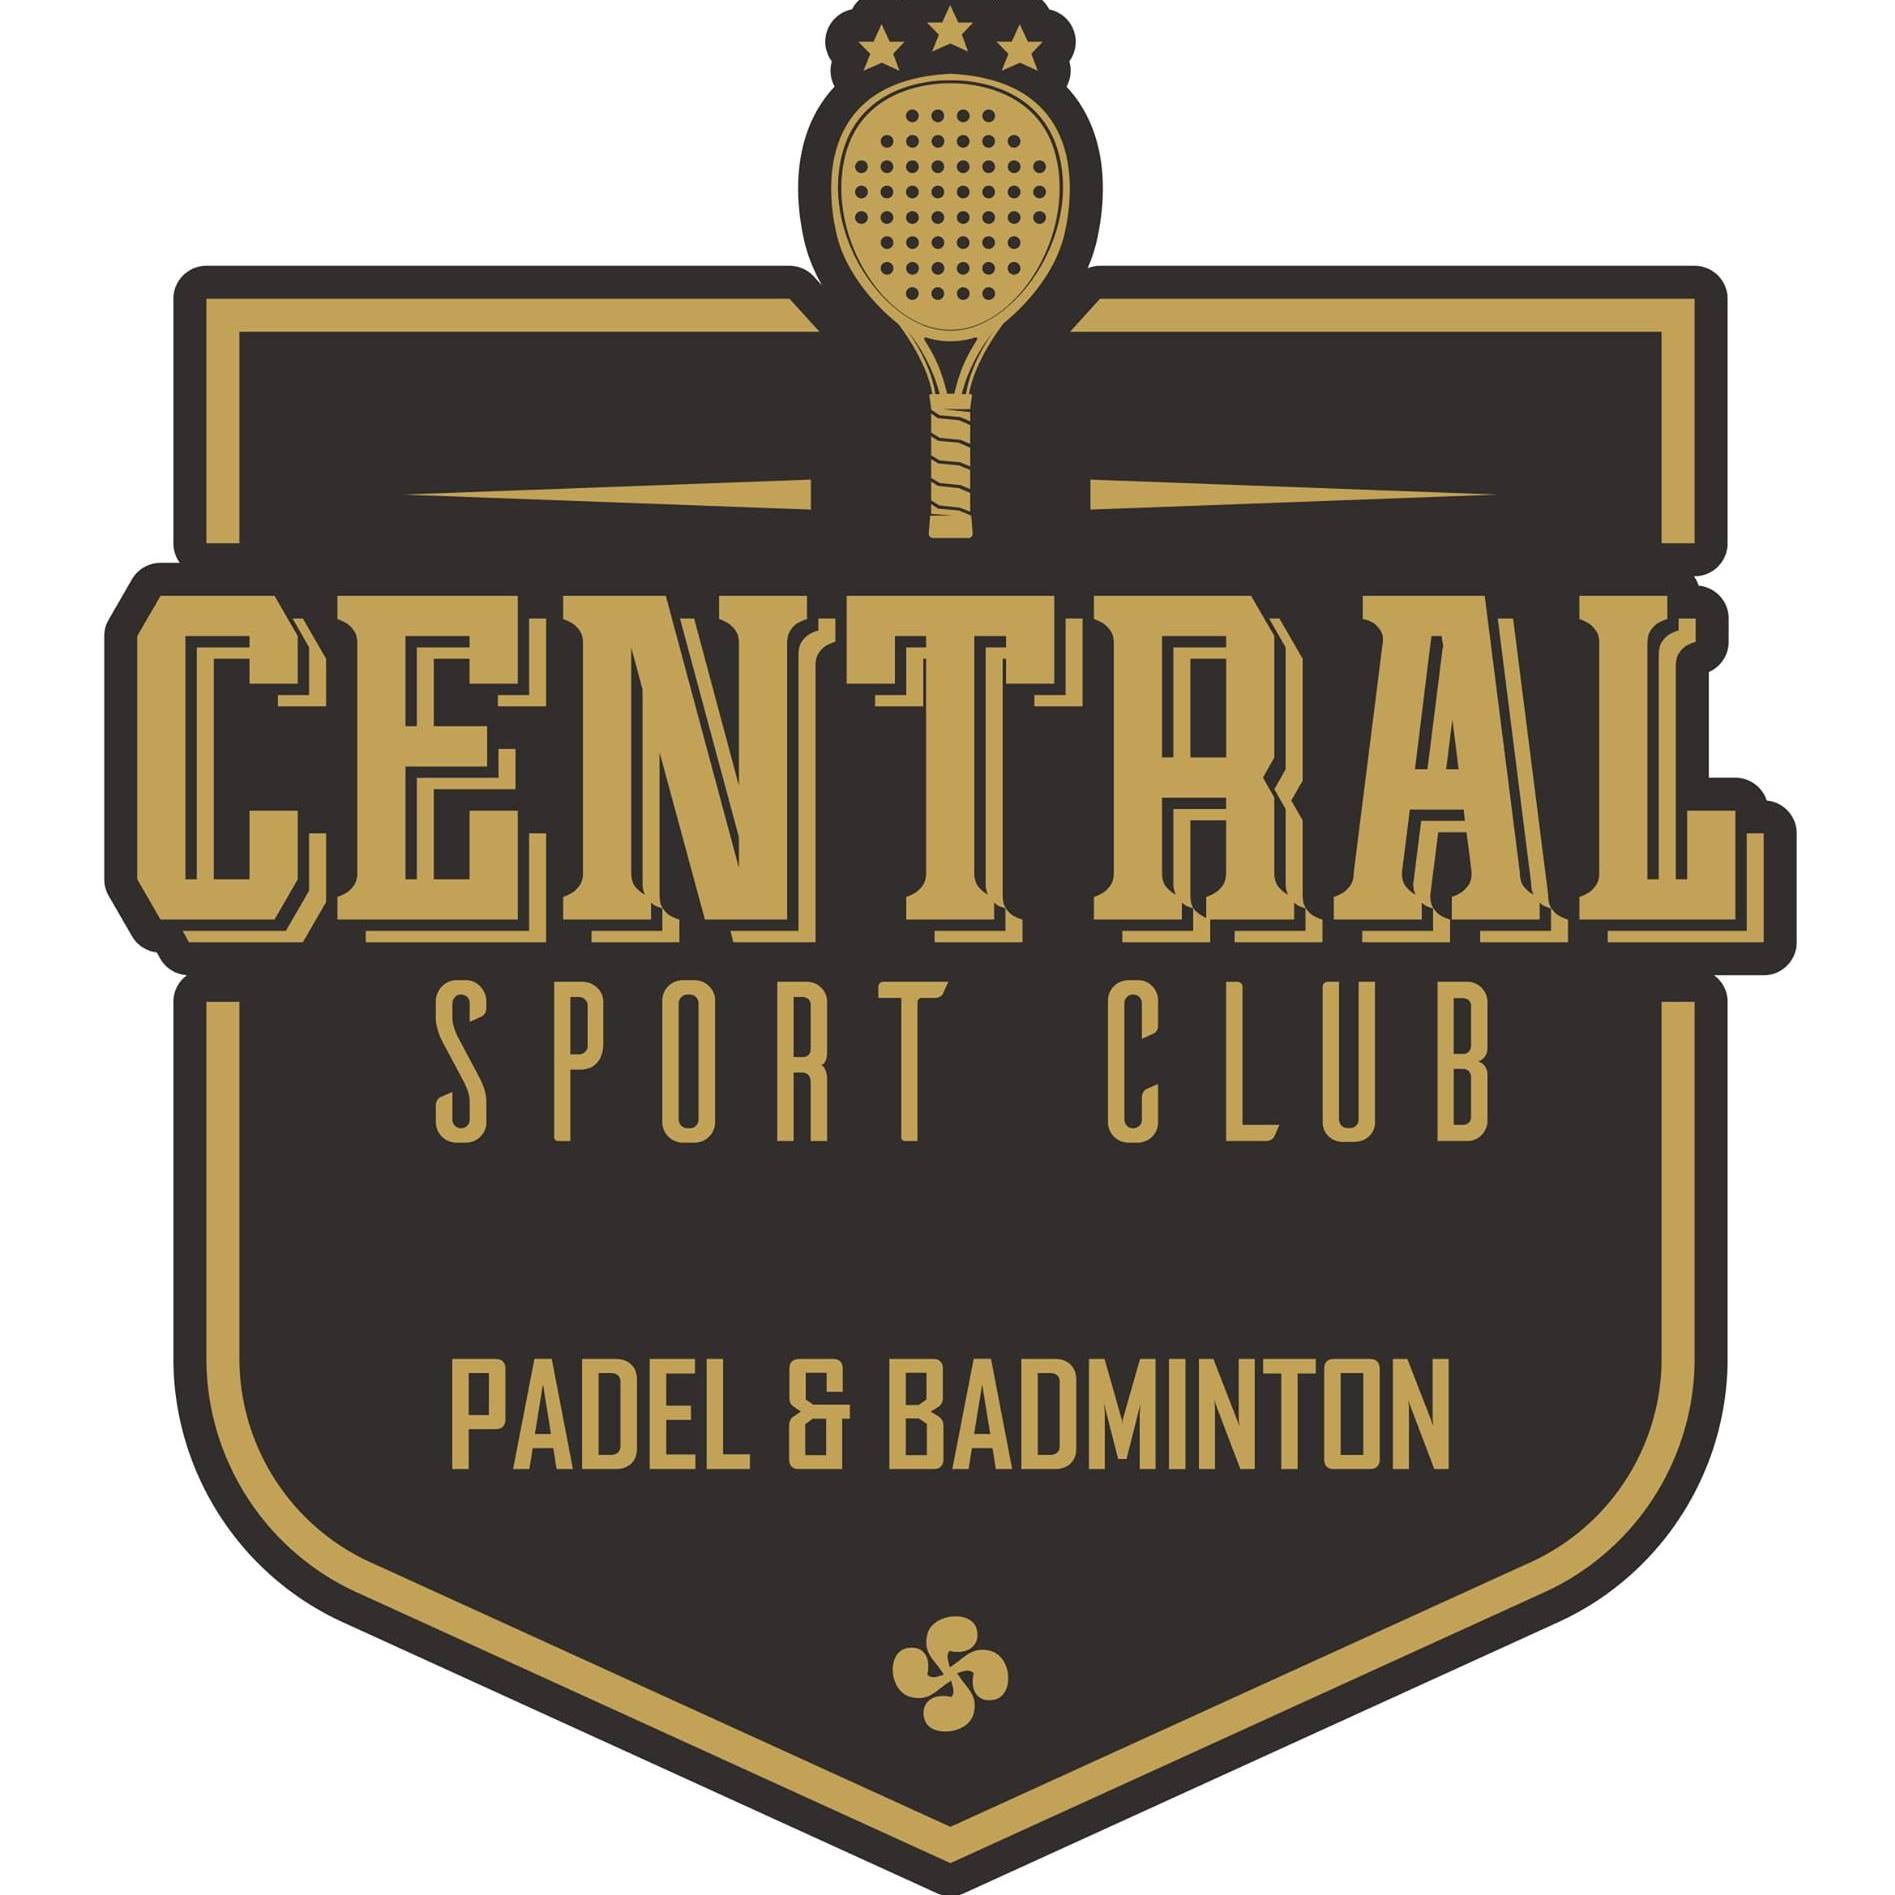 Central Sportklubb